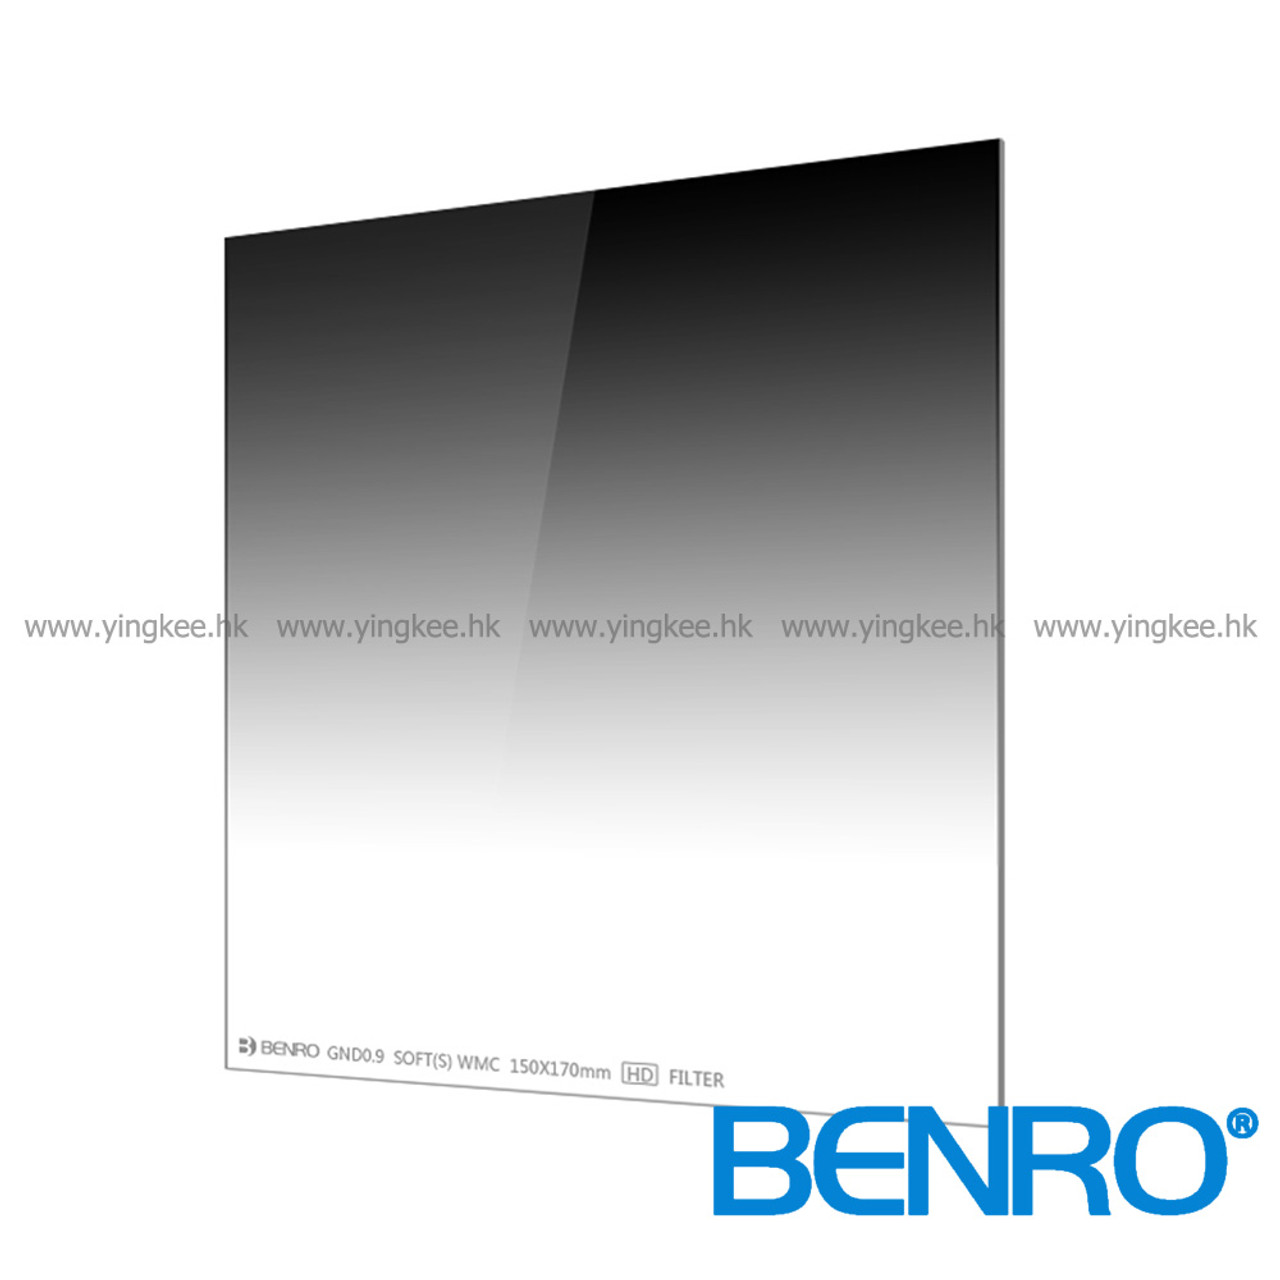 Benro Master GND8 (0.9) SOFT 150mm Glass Filter 漸變灰濾鏡